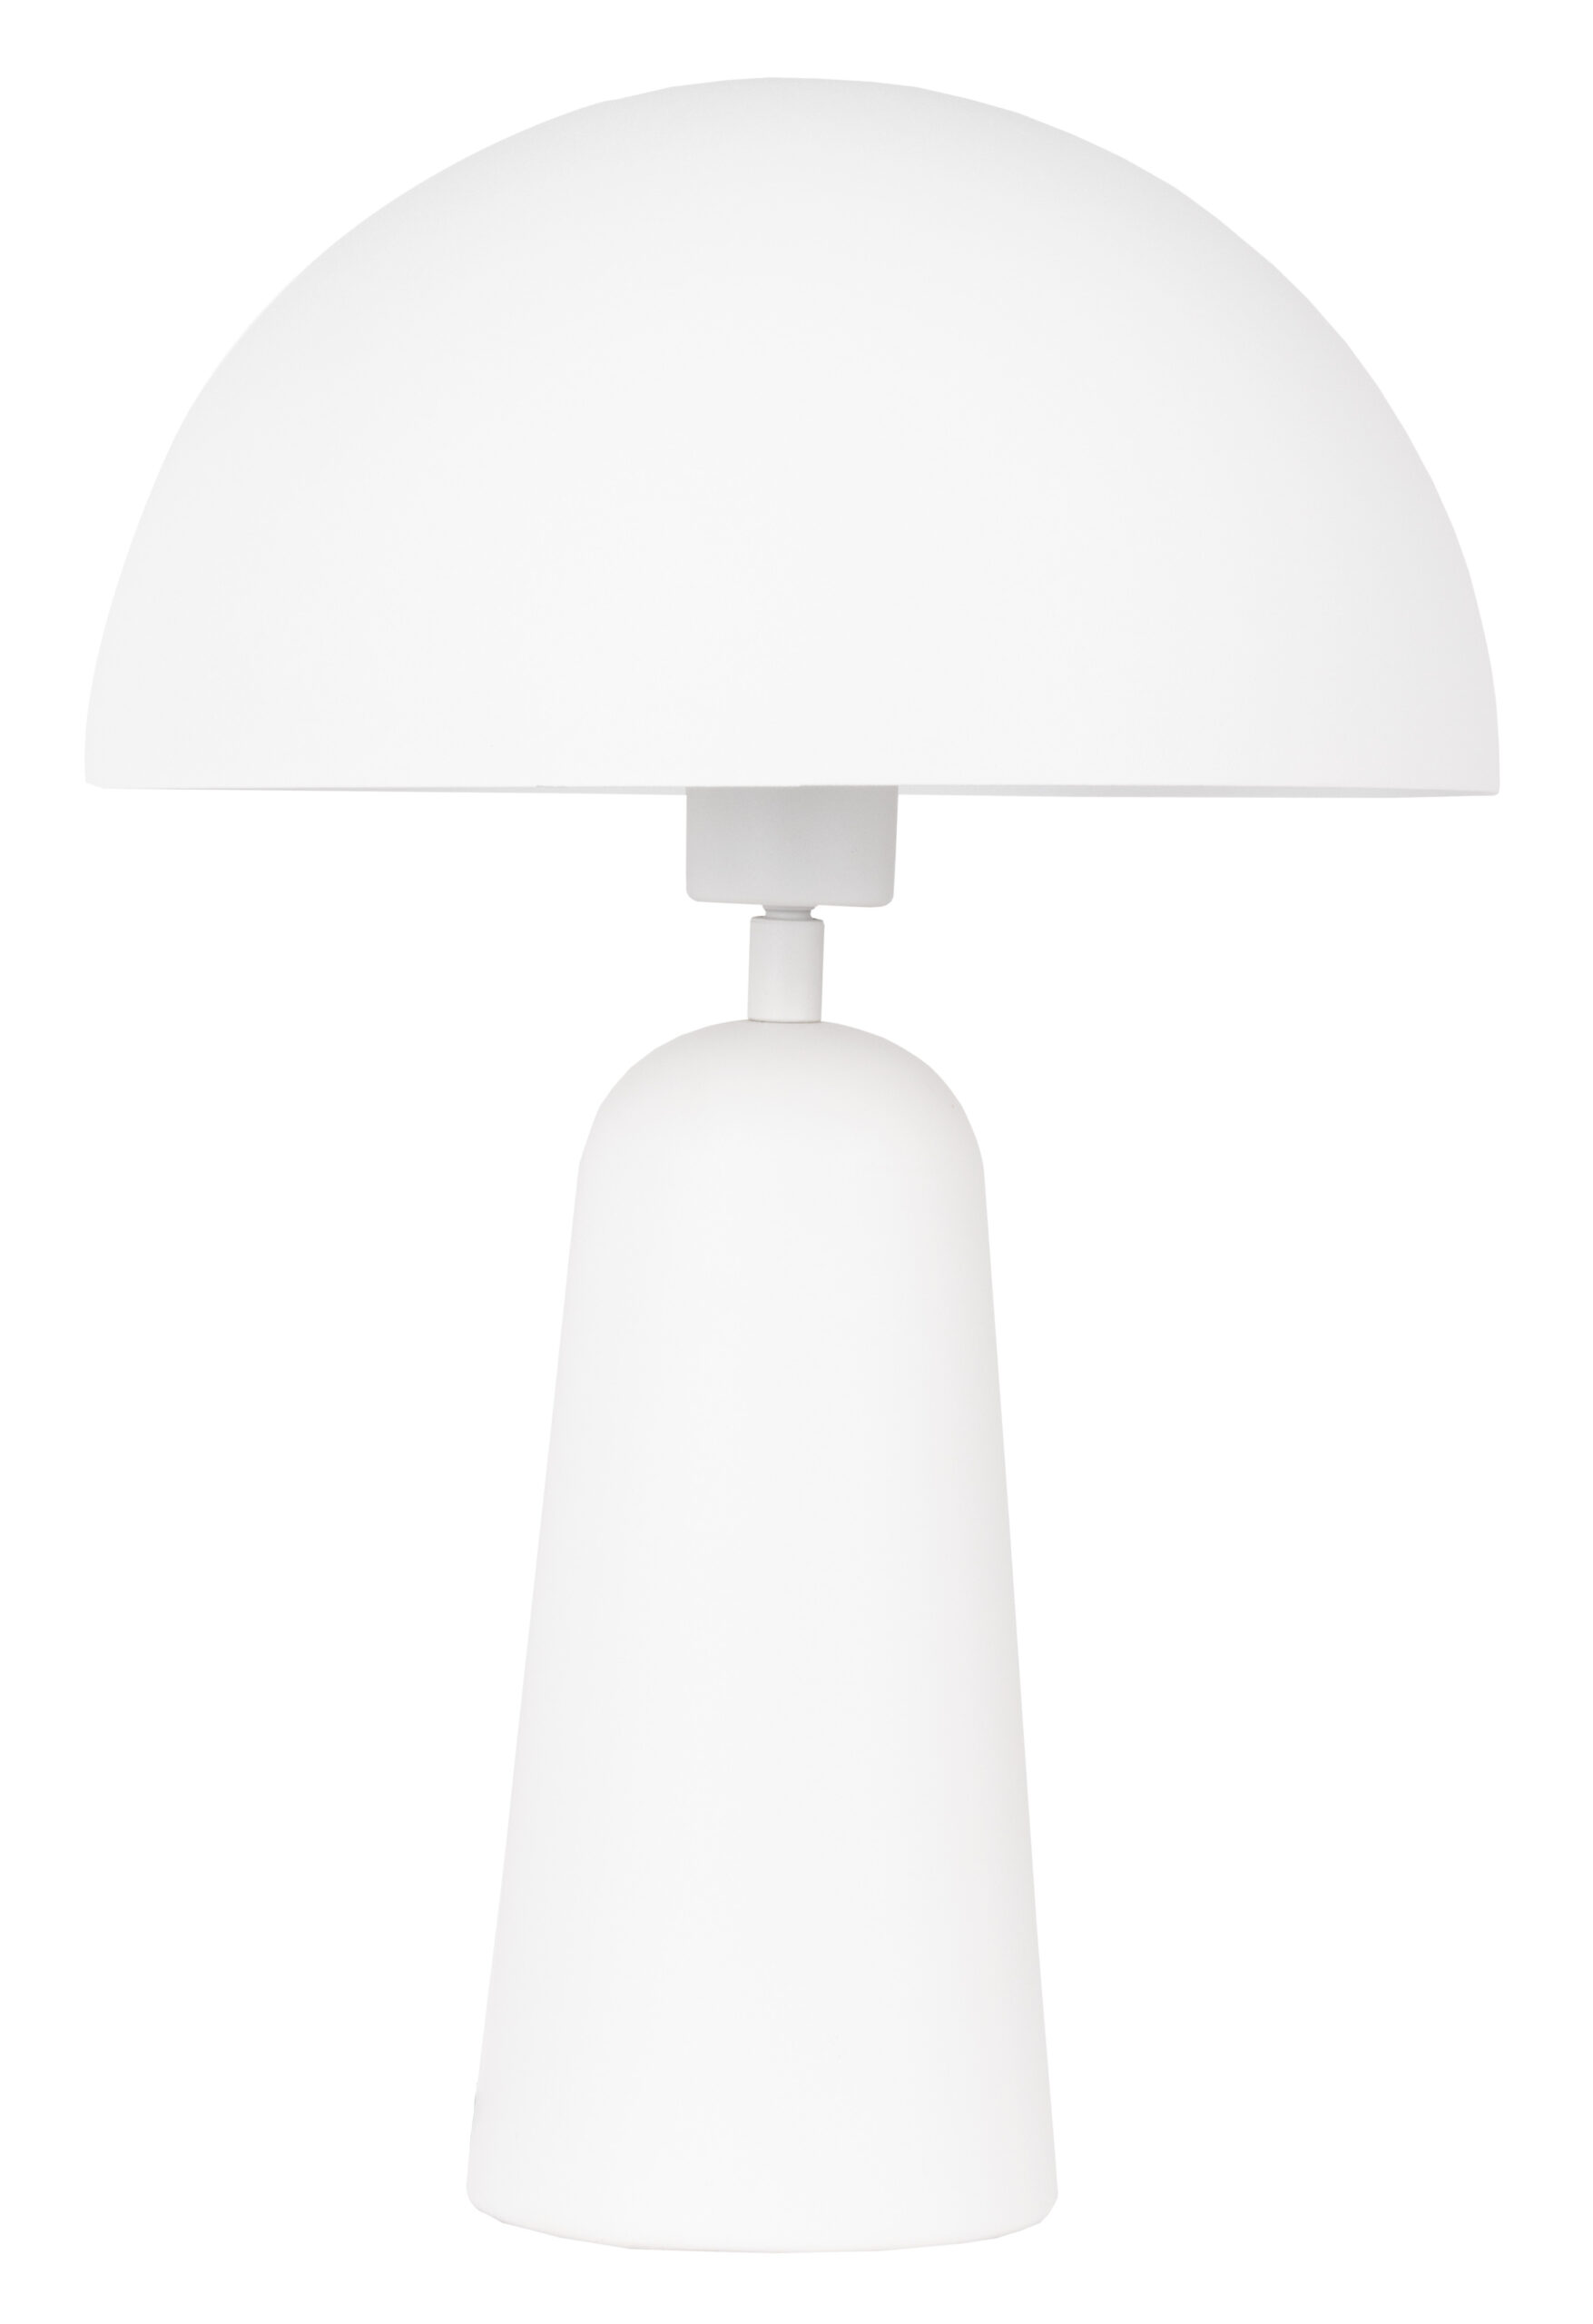 Lampe de table ARANZOLA 206033A